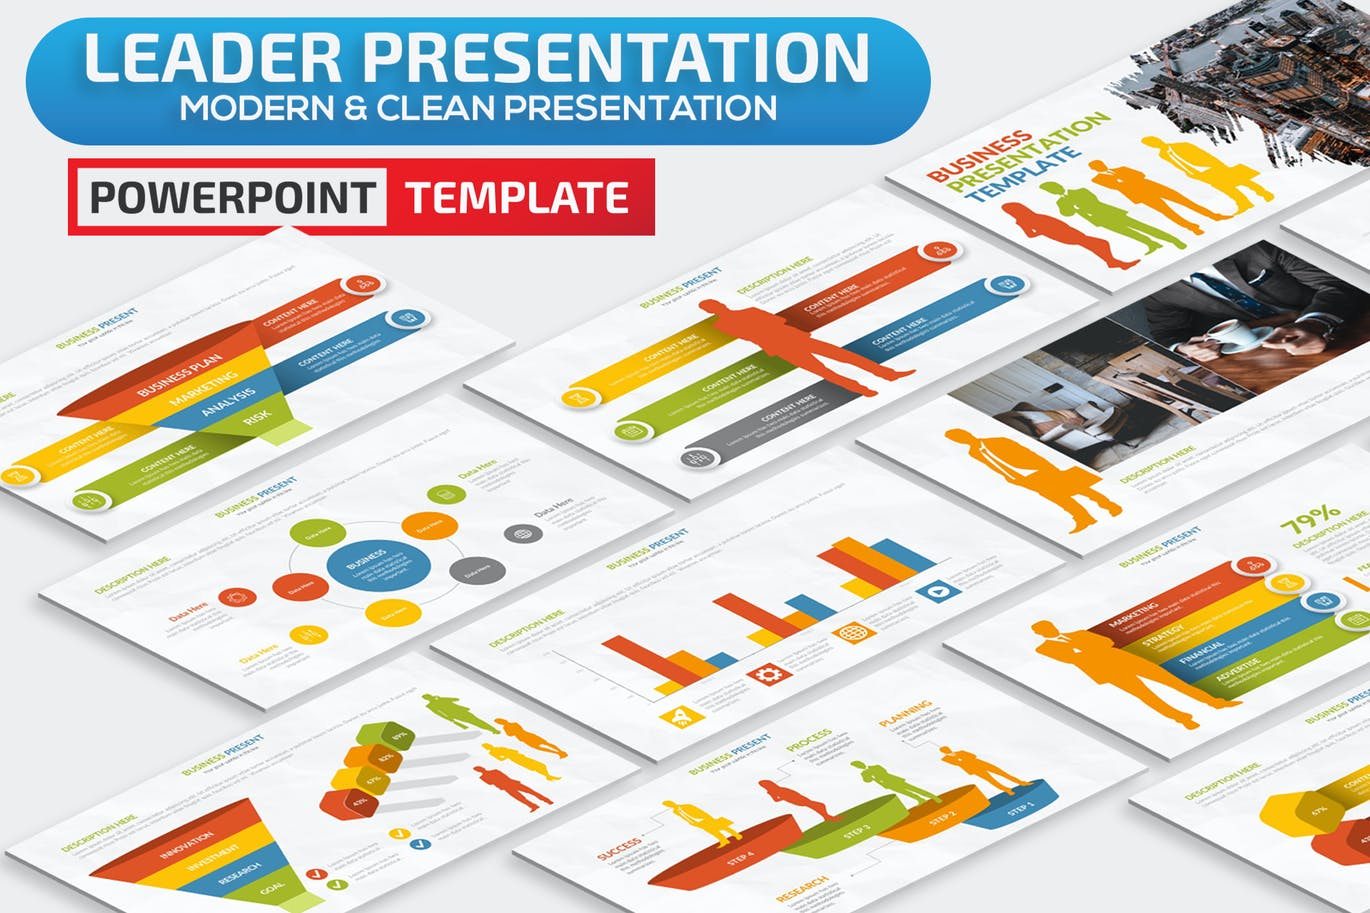 Leader PowerPoint Presentation Template